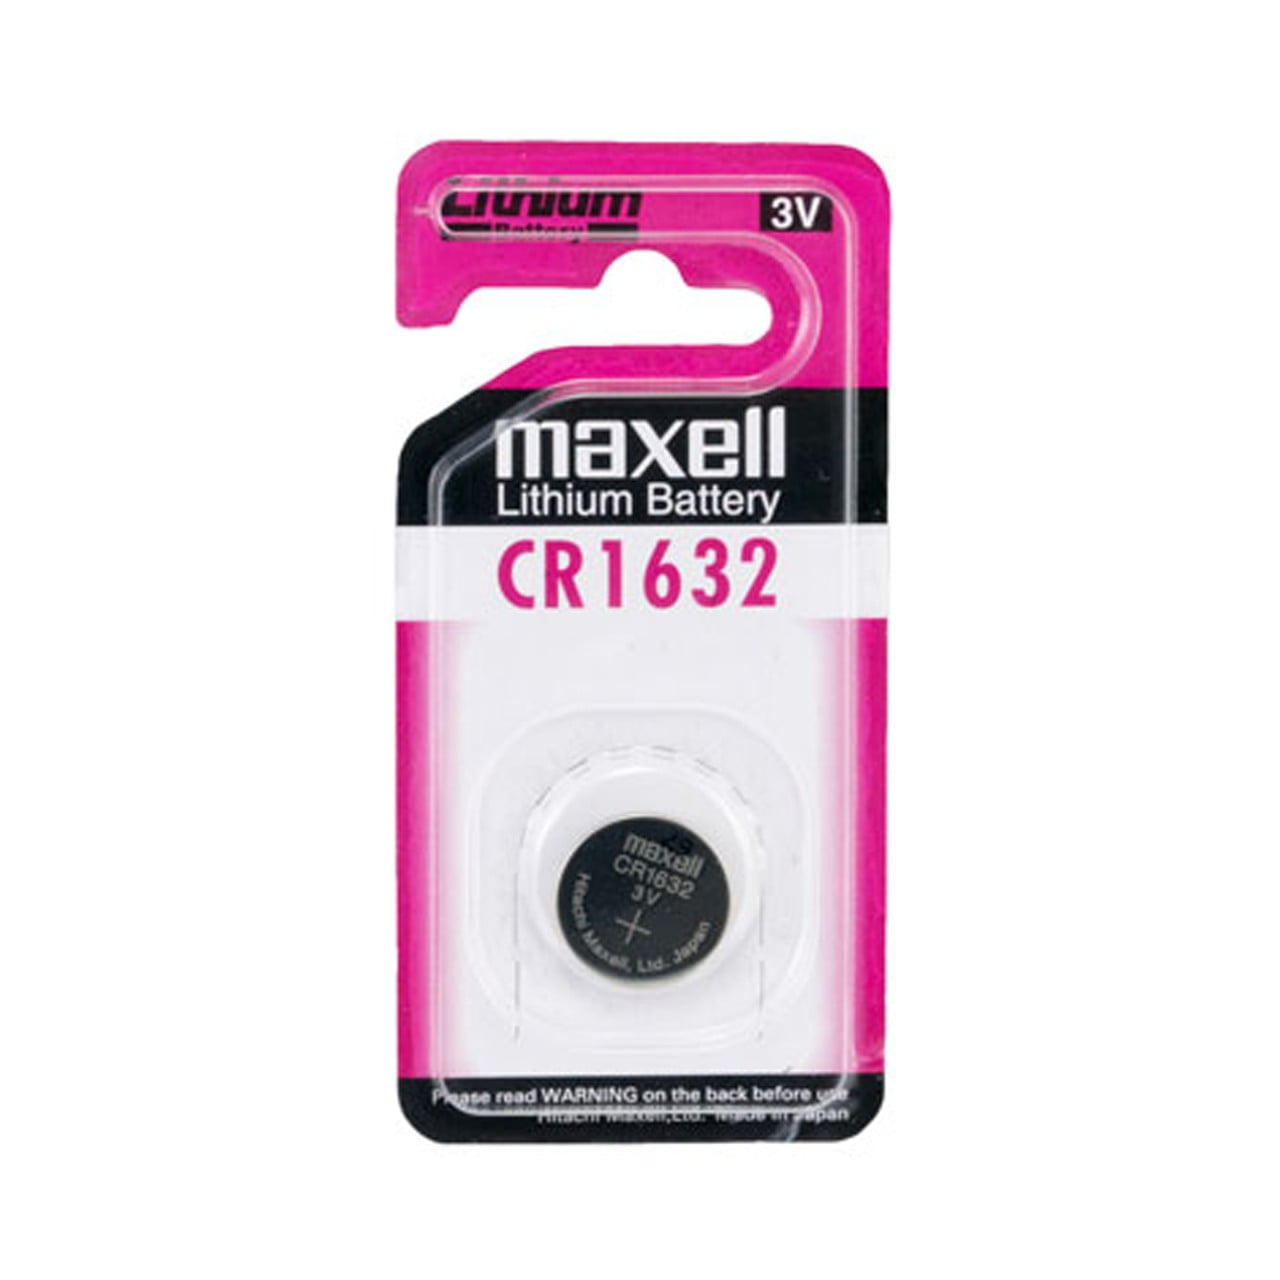 Maxell-CR1632-3V-Lithium-kharidkala24-1pcs-No129-scaled.jpg